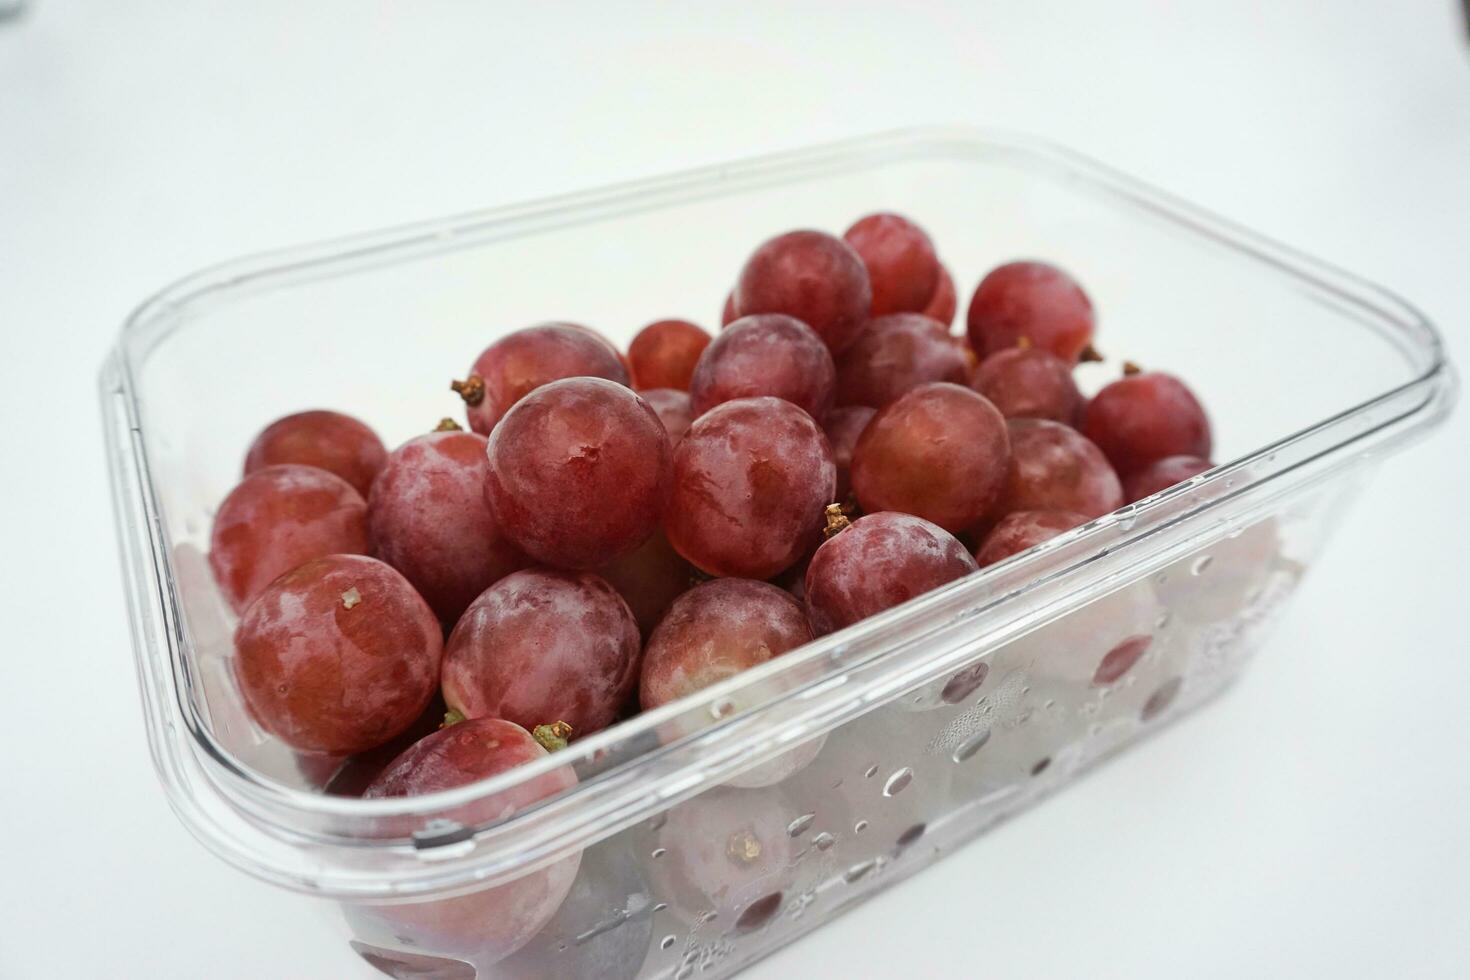 druiven in huisdier plastic containers foto